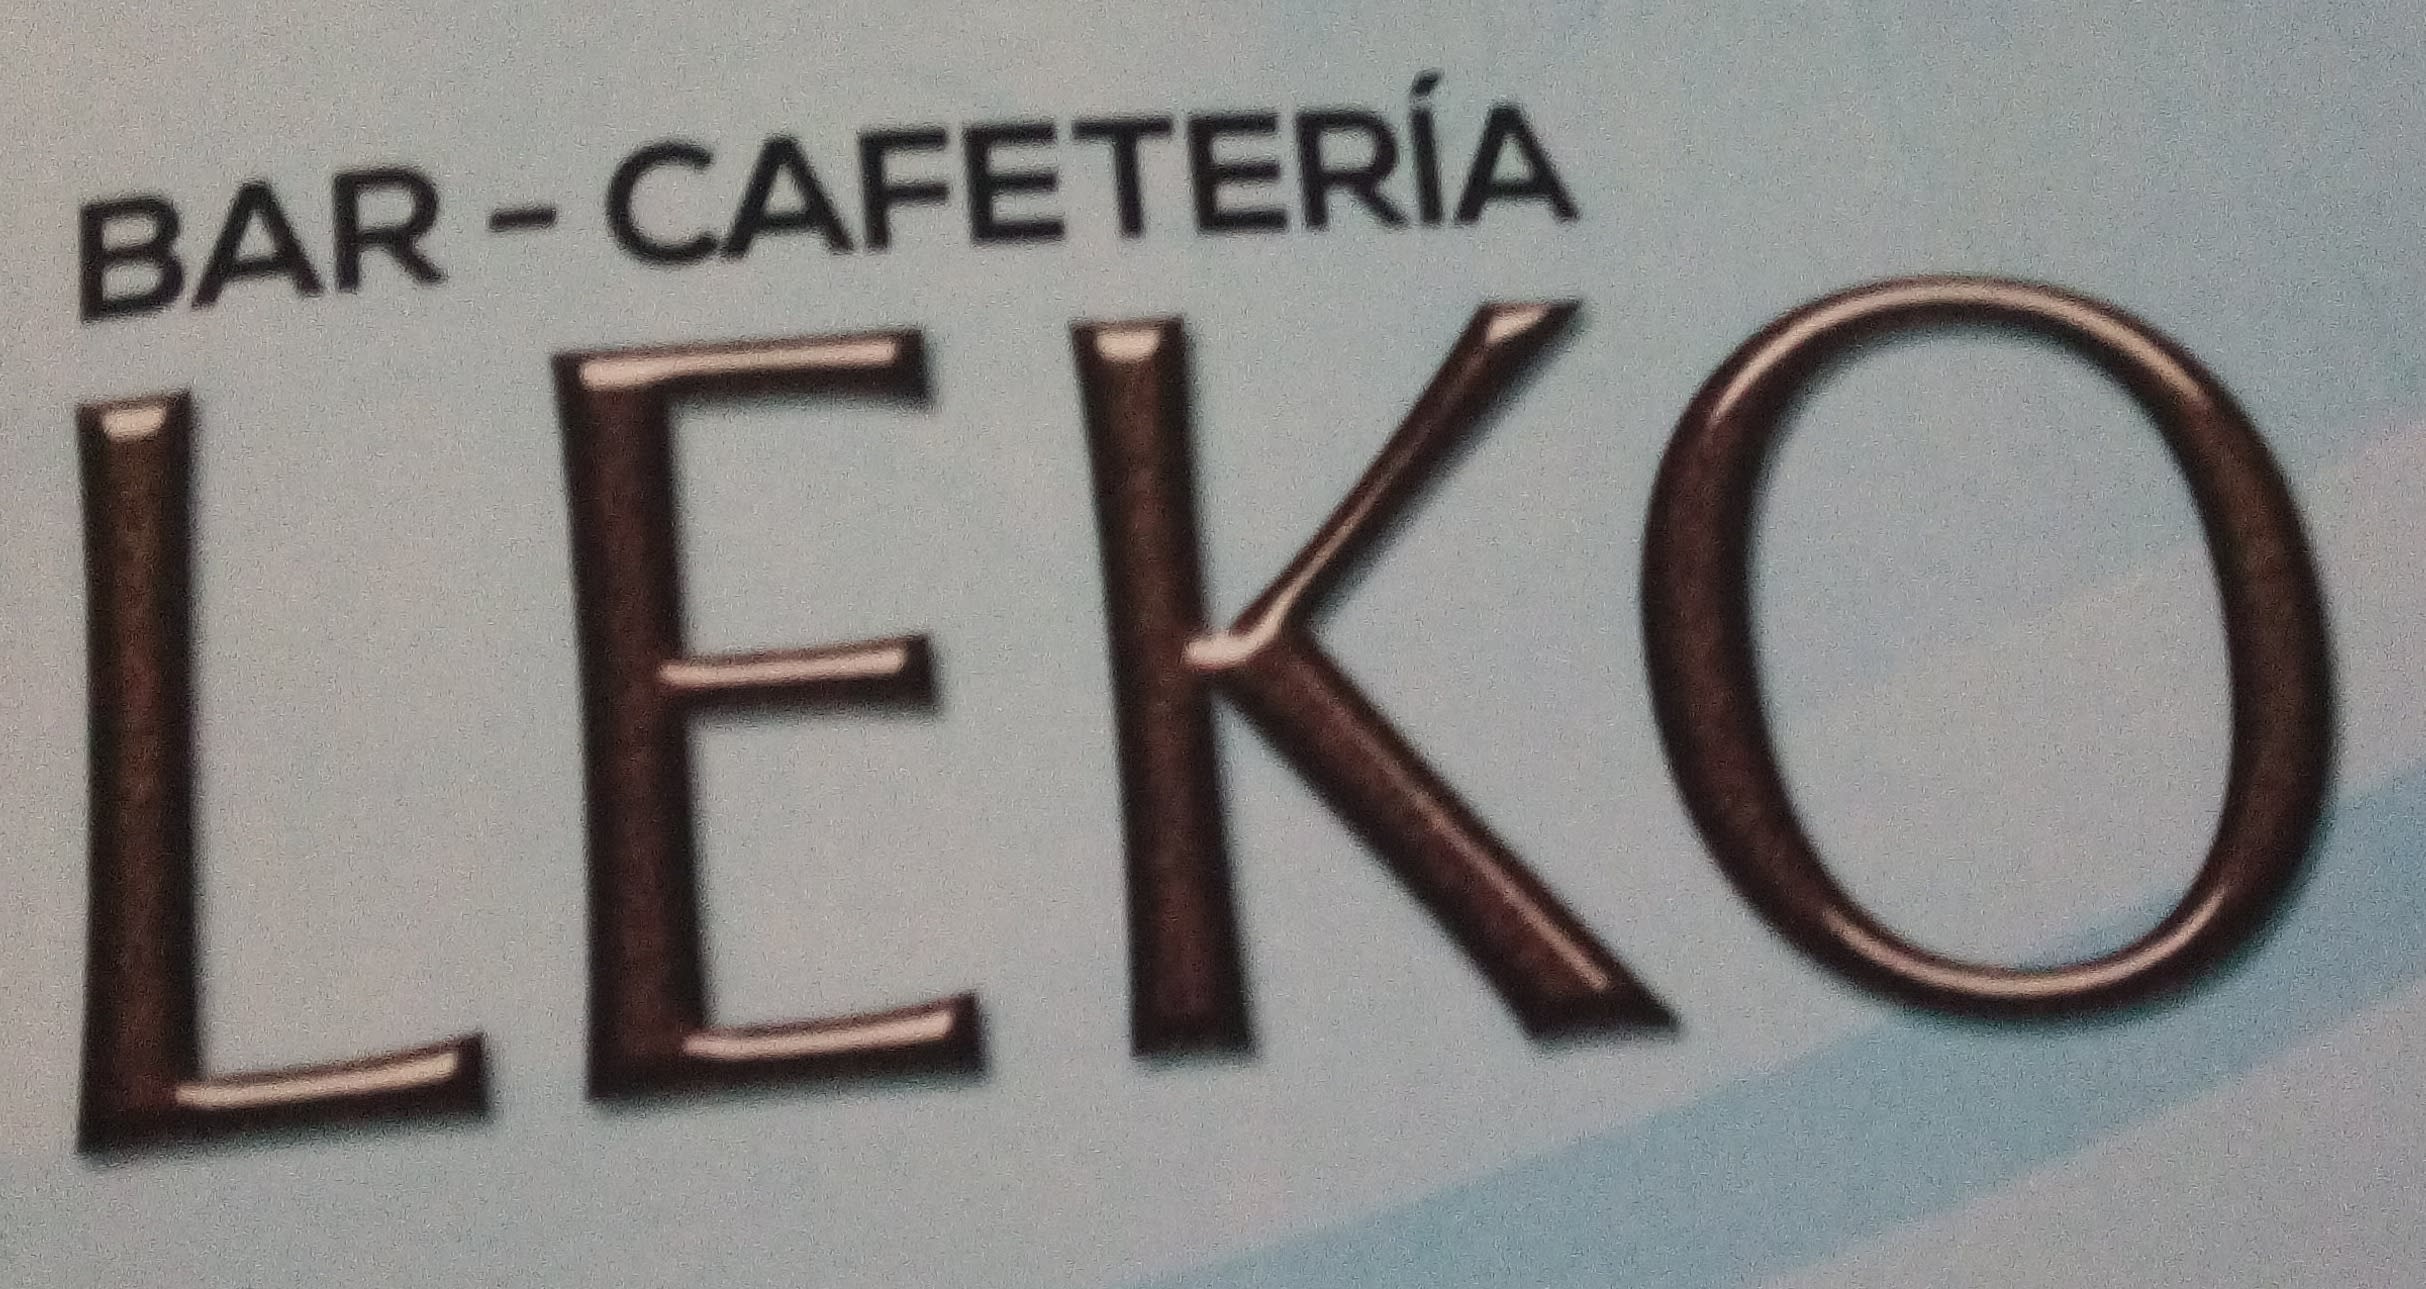 Bar cafetería Leko